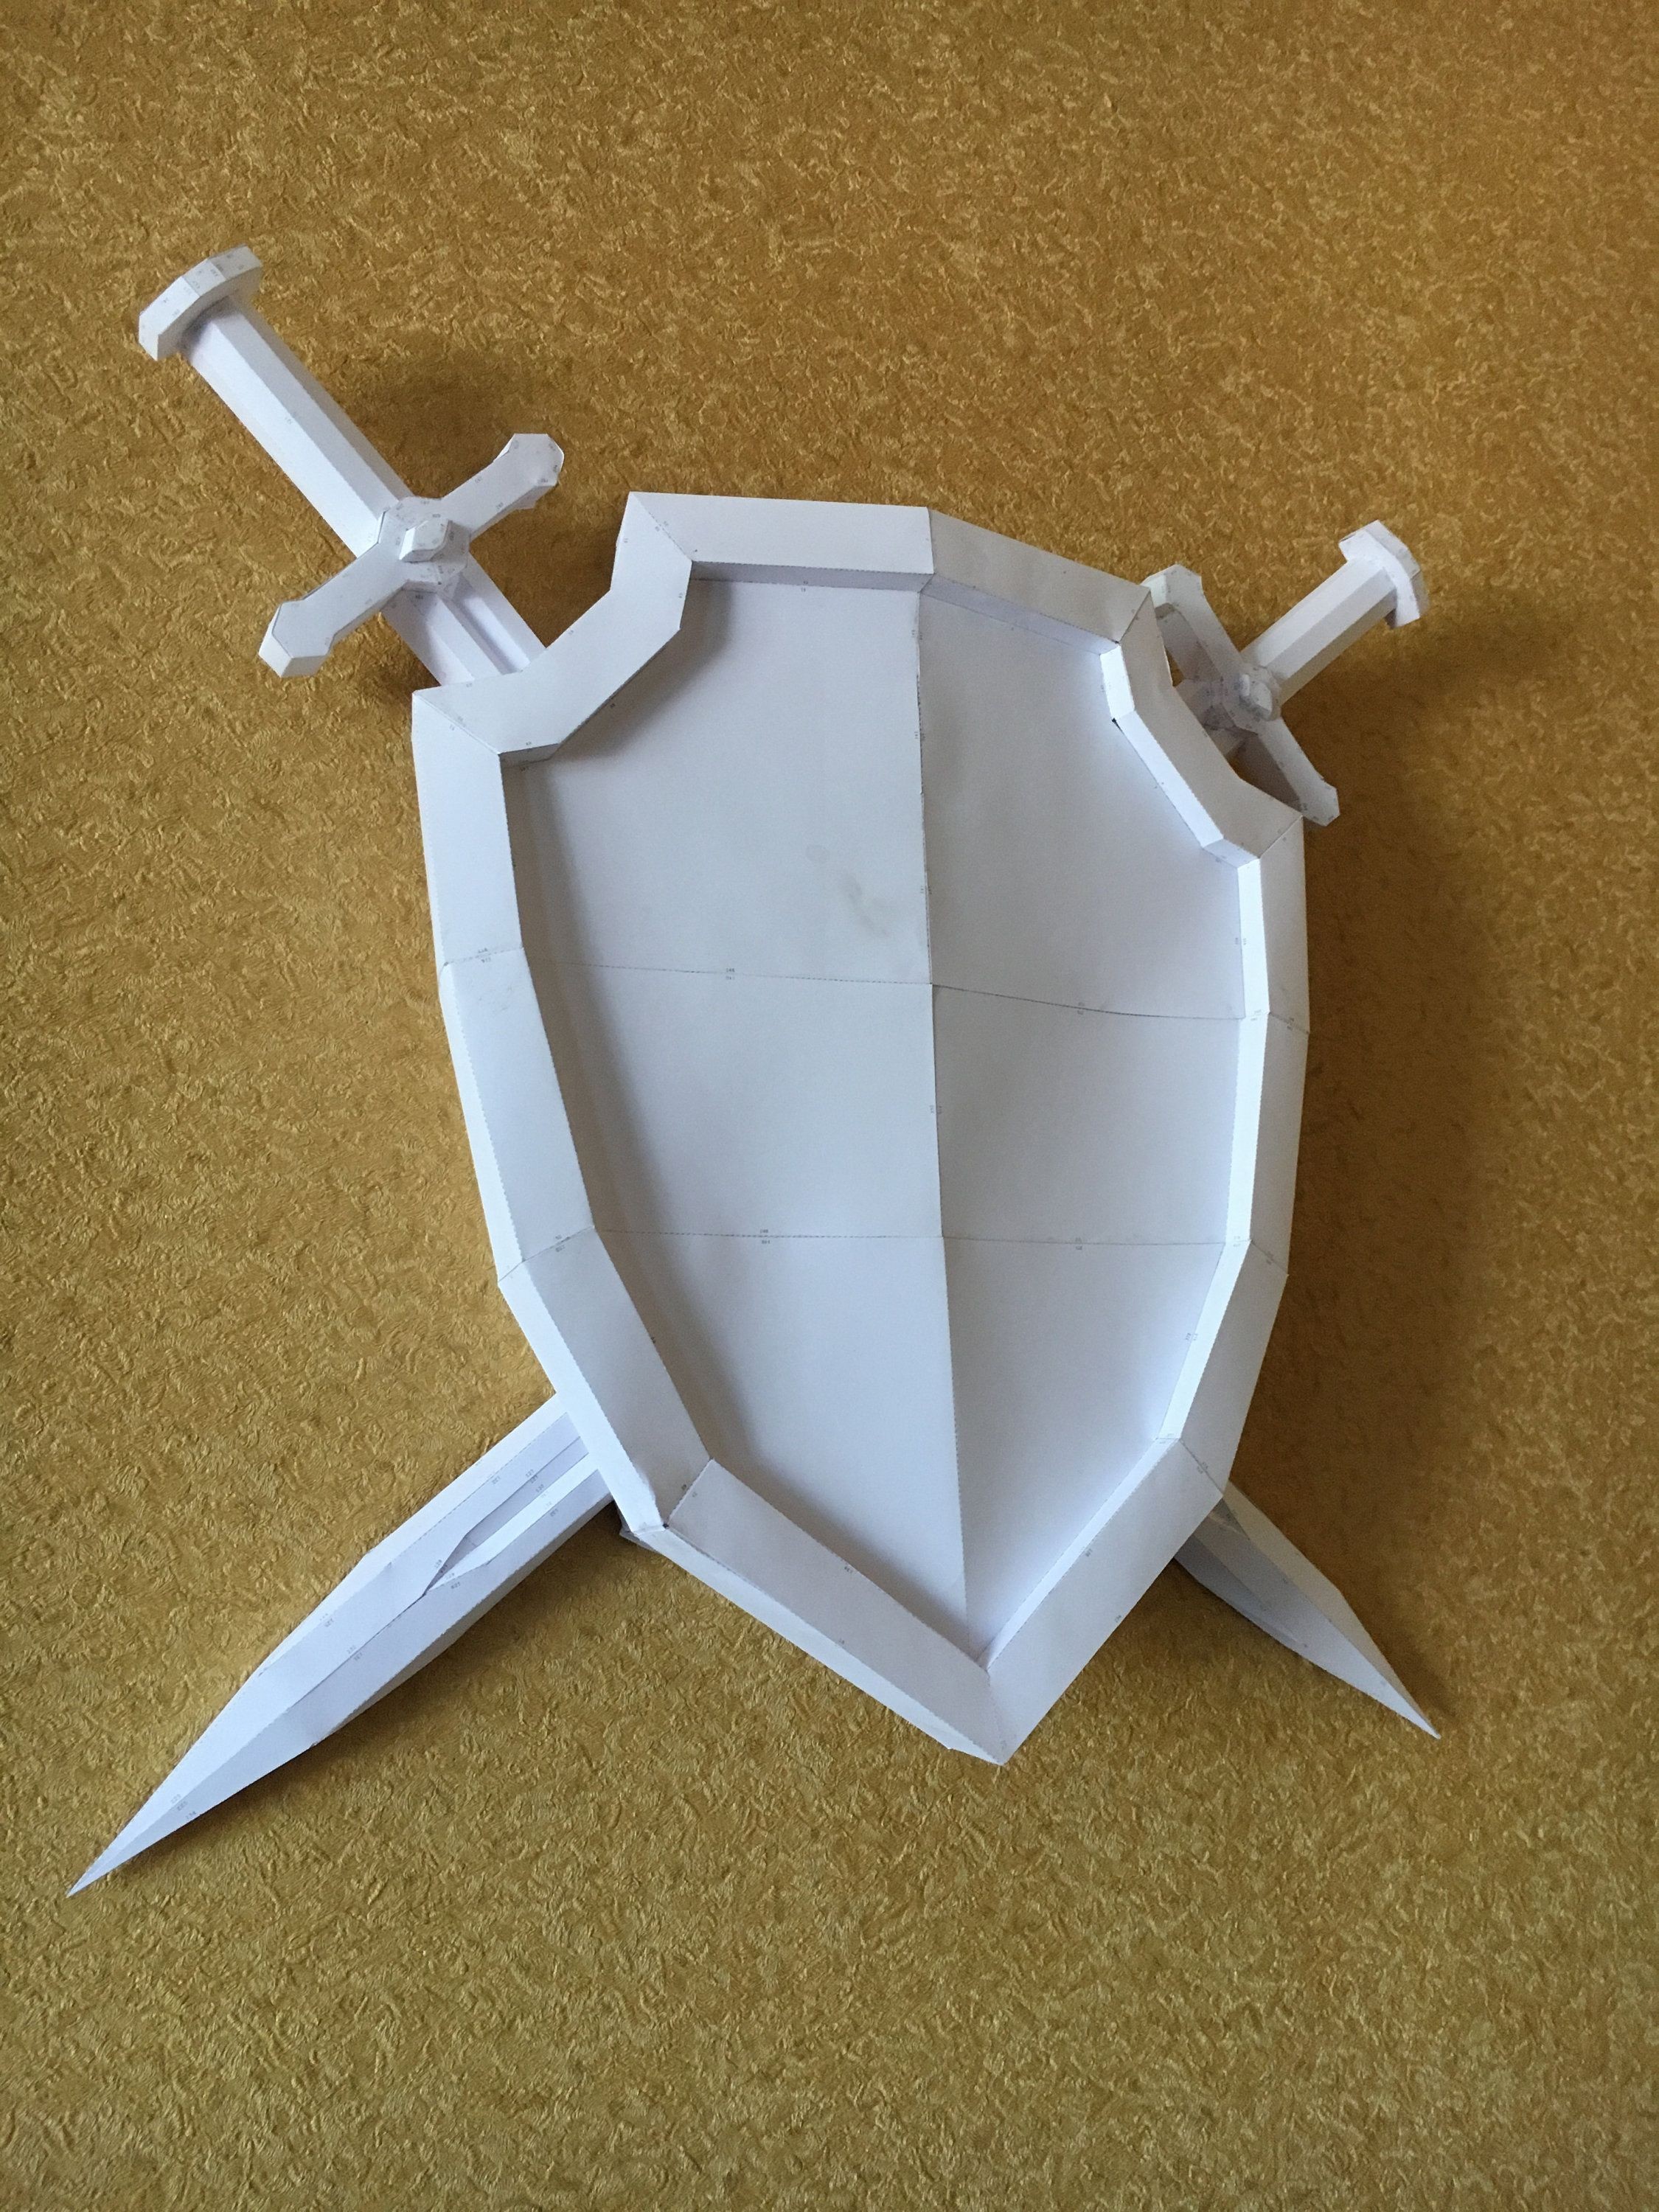 Batman Papercraft Sword Shield Diy Papercraft Model ÐÑÐ¼Ð°Ð¶Ð½ÑÐµ Ð¸Ð·Ð´ÐµÐ Ð¸Ñ